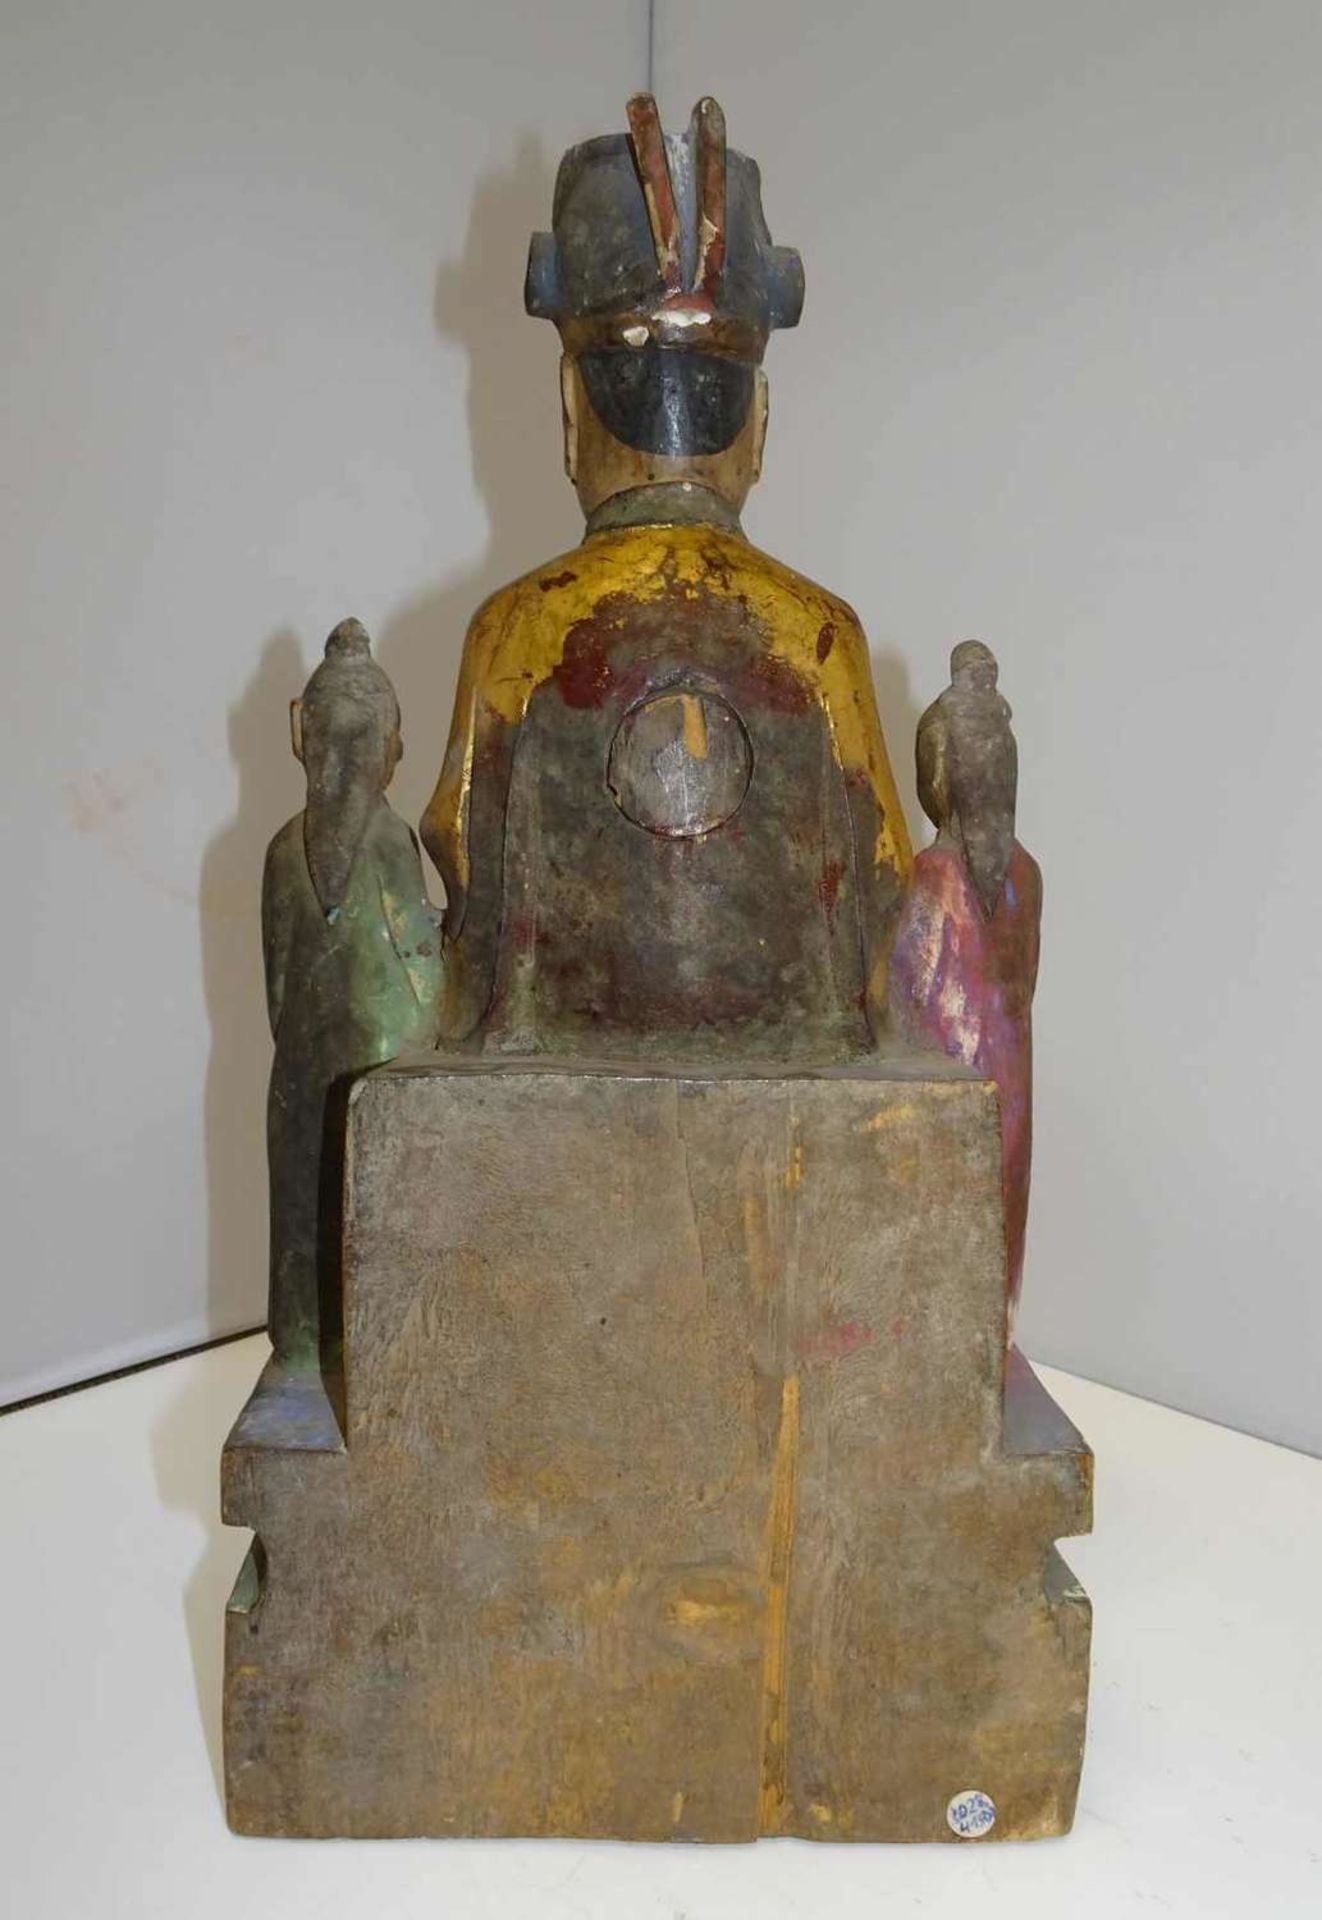 Herrscherfigur mit Beifiguren, China 18./19. Jahrhundert, Holz. Rückseitig verschlossene - Image 2 of 4